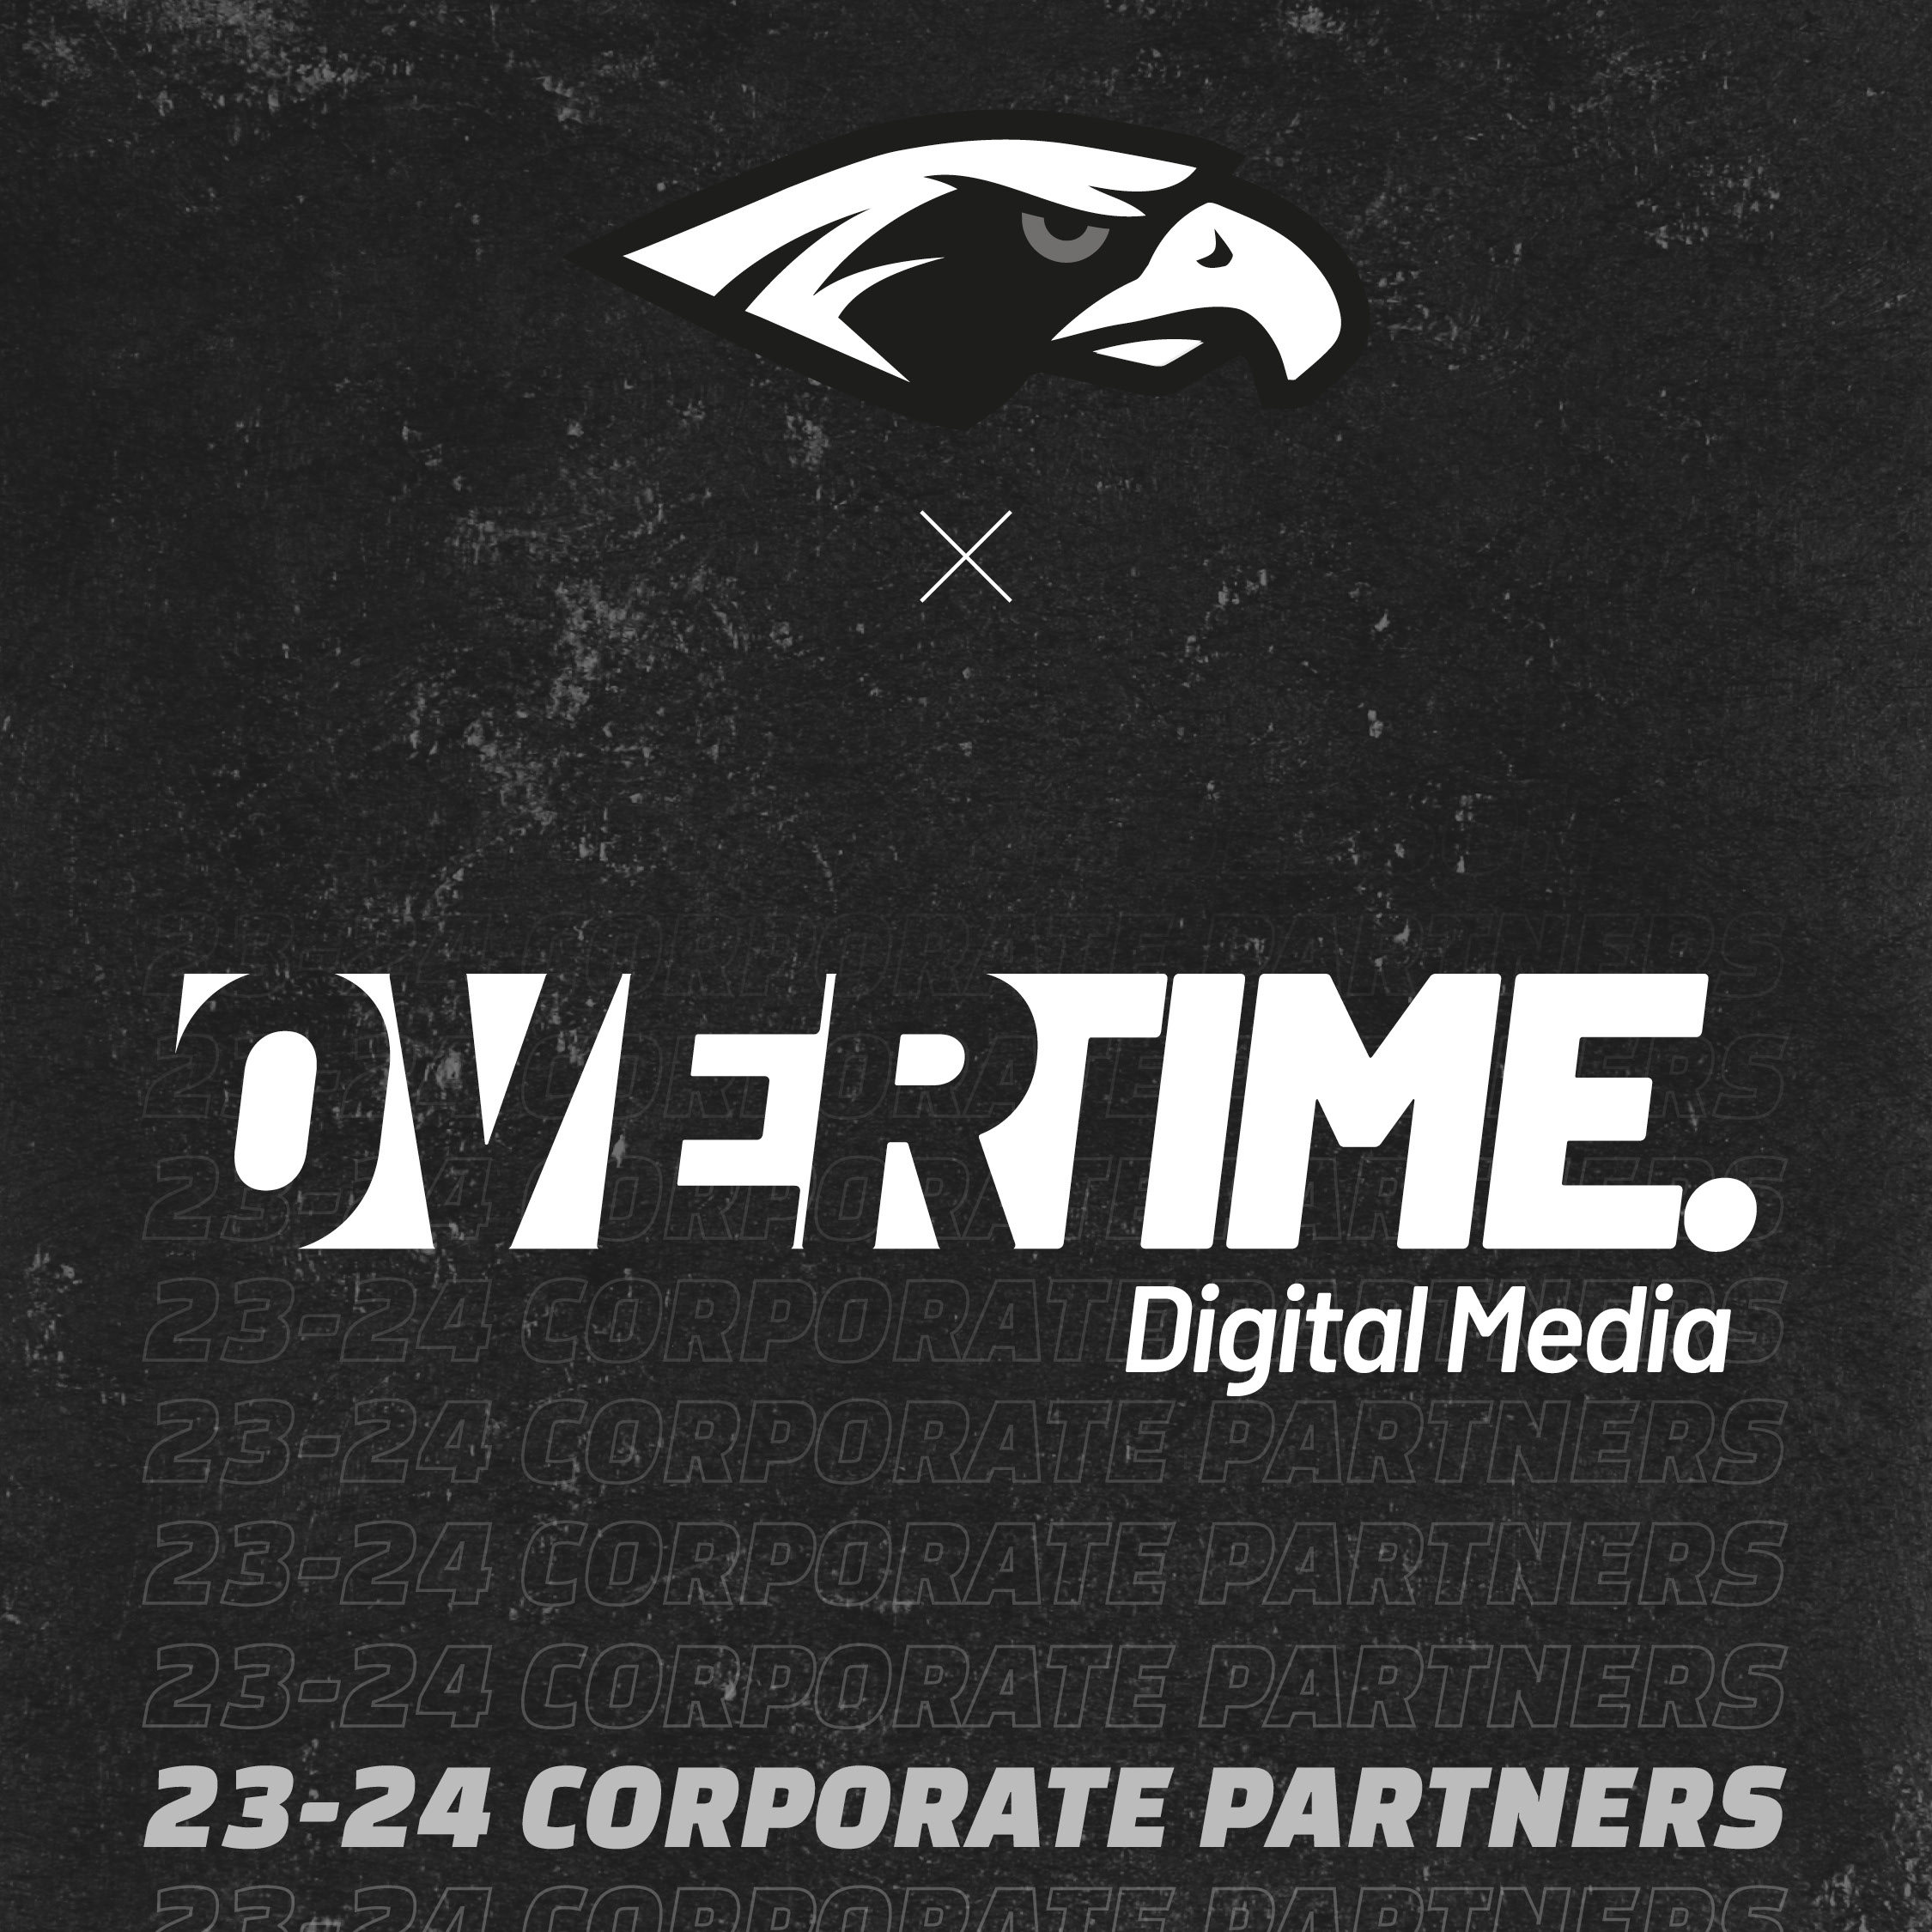 Overtime Digital Media return as corporate sponsor